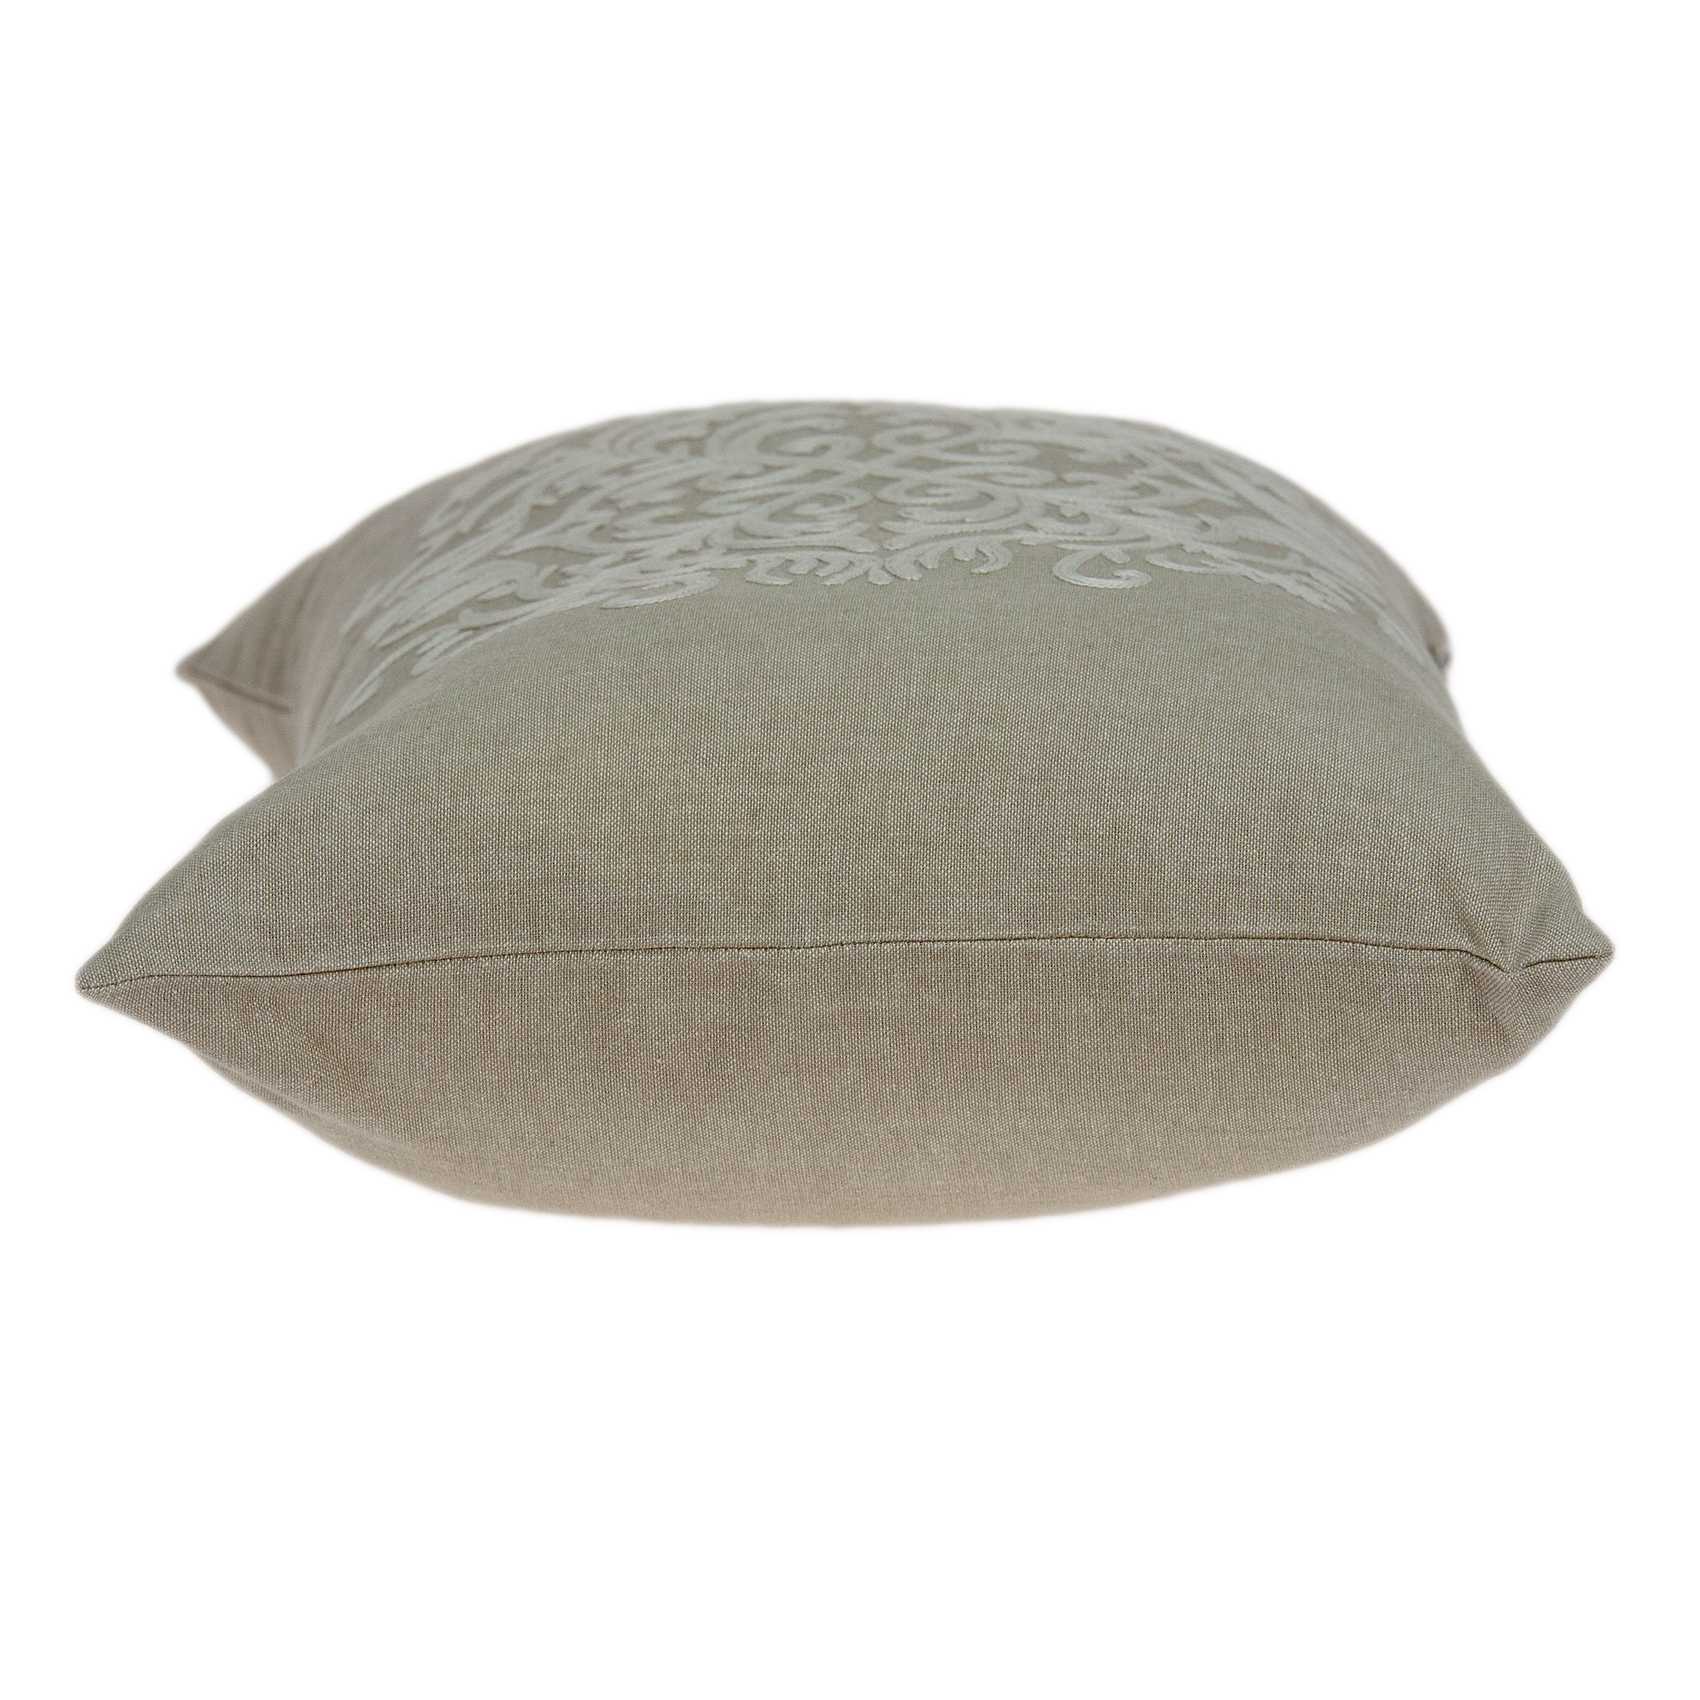 20" x 0.5" x 14" Elegant Transitional Beige Cotton Accent Pillow Cover